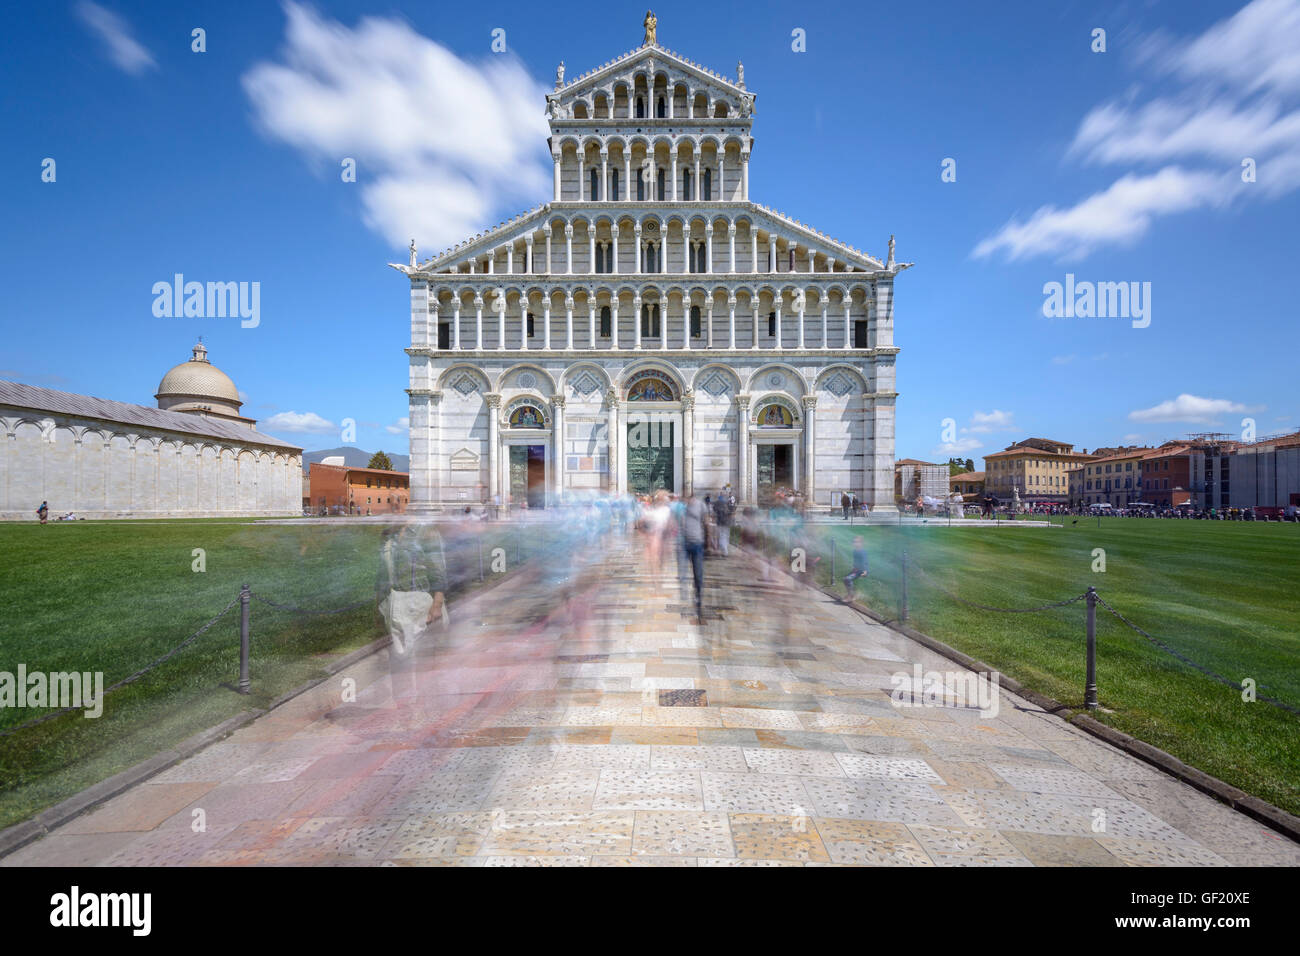 Santa Maria Assunta Cathedral, Piazza del Duomo, Pisa, Italy Stock Photo